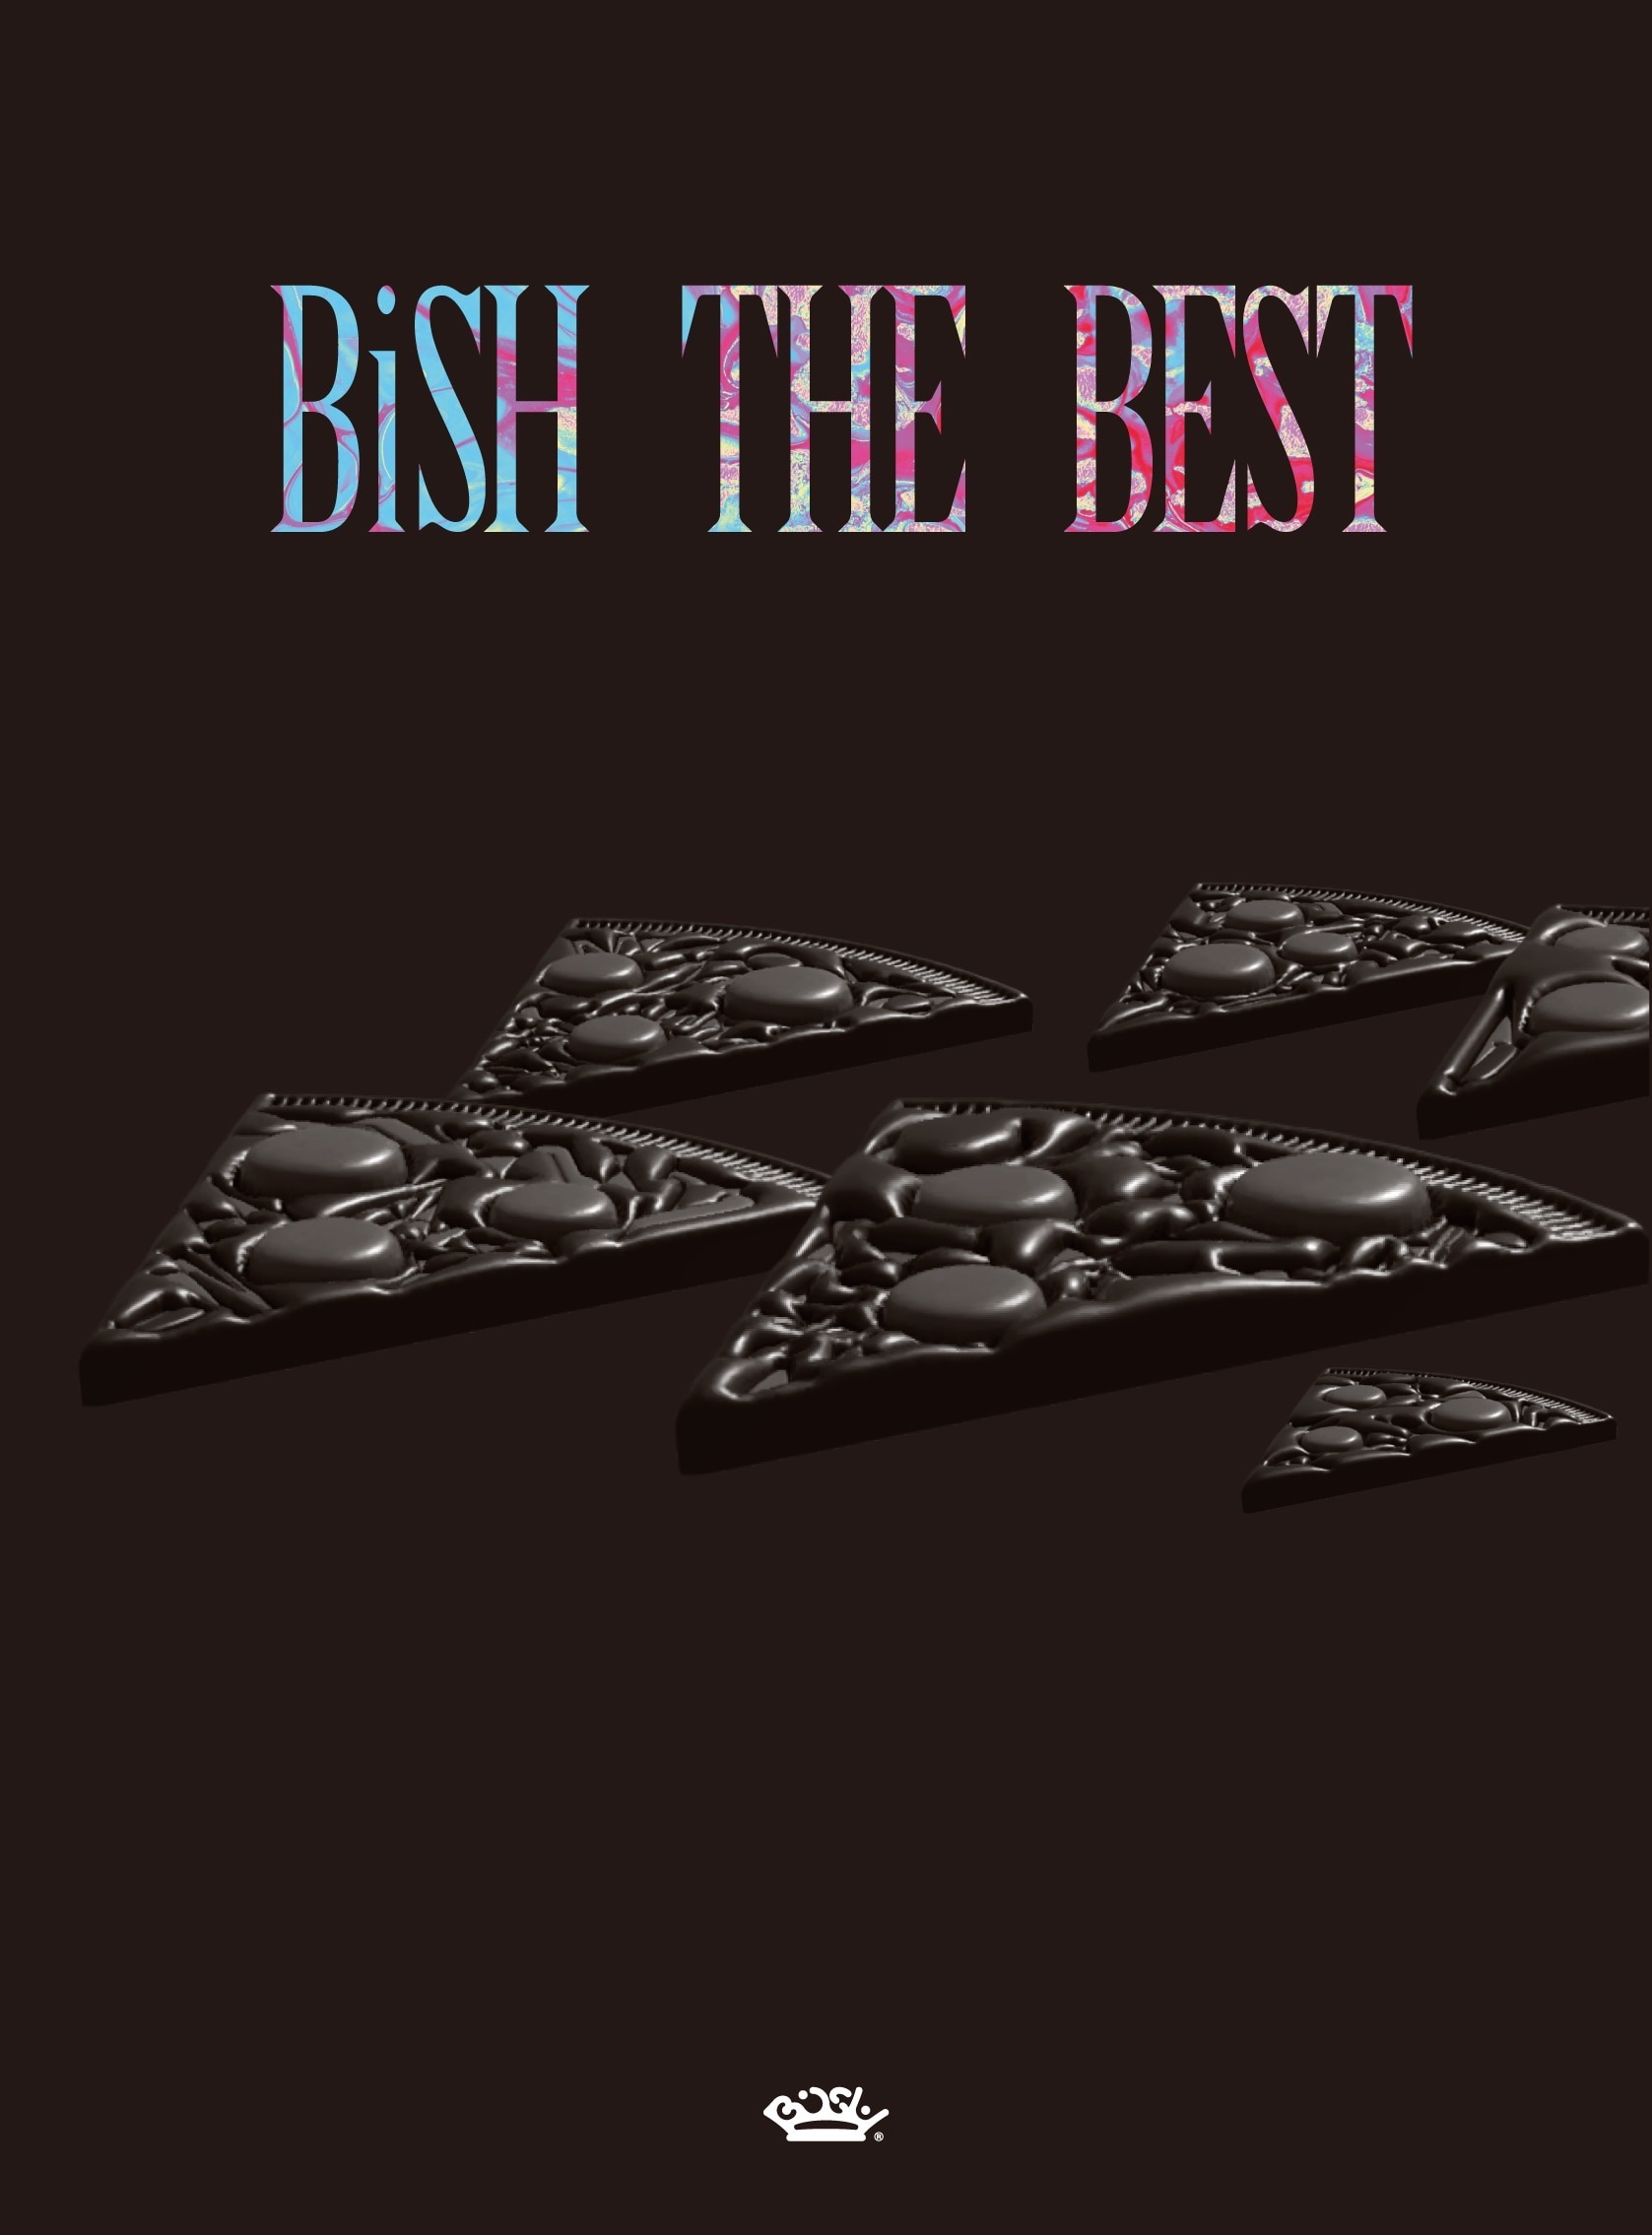 BiSH - Bish The Best [Double CD+Blu-Ray]